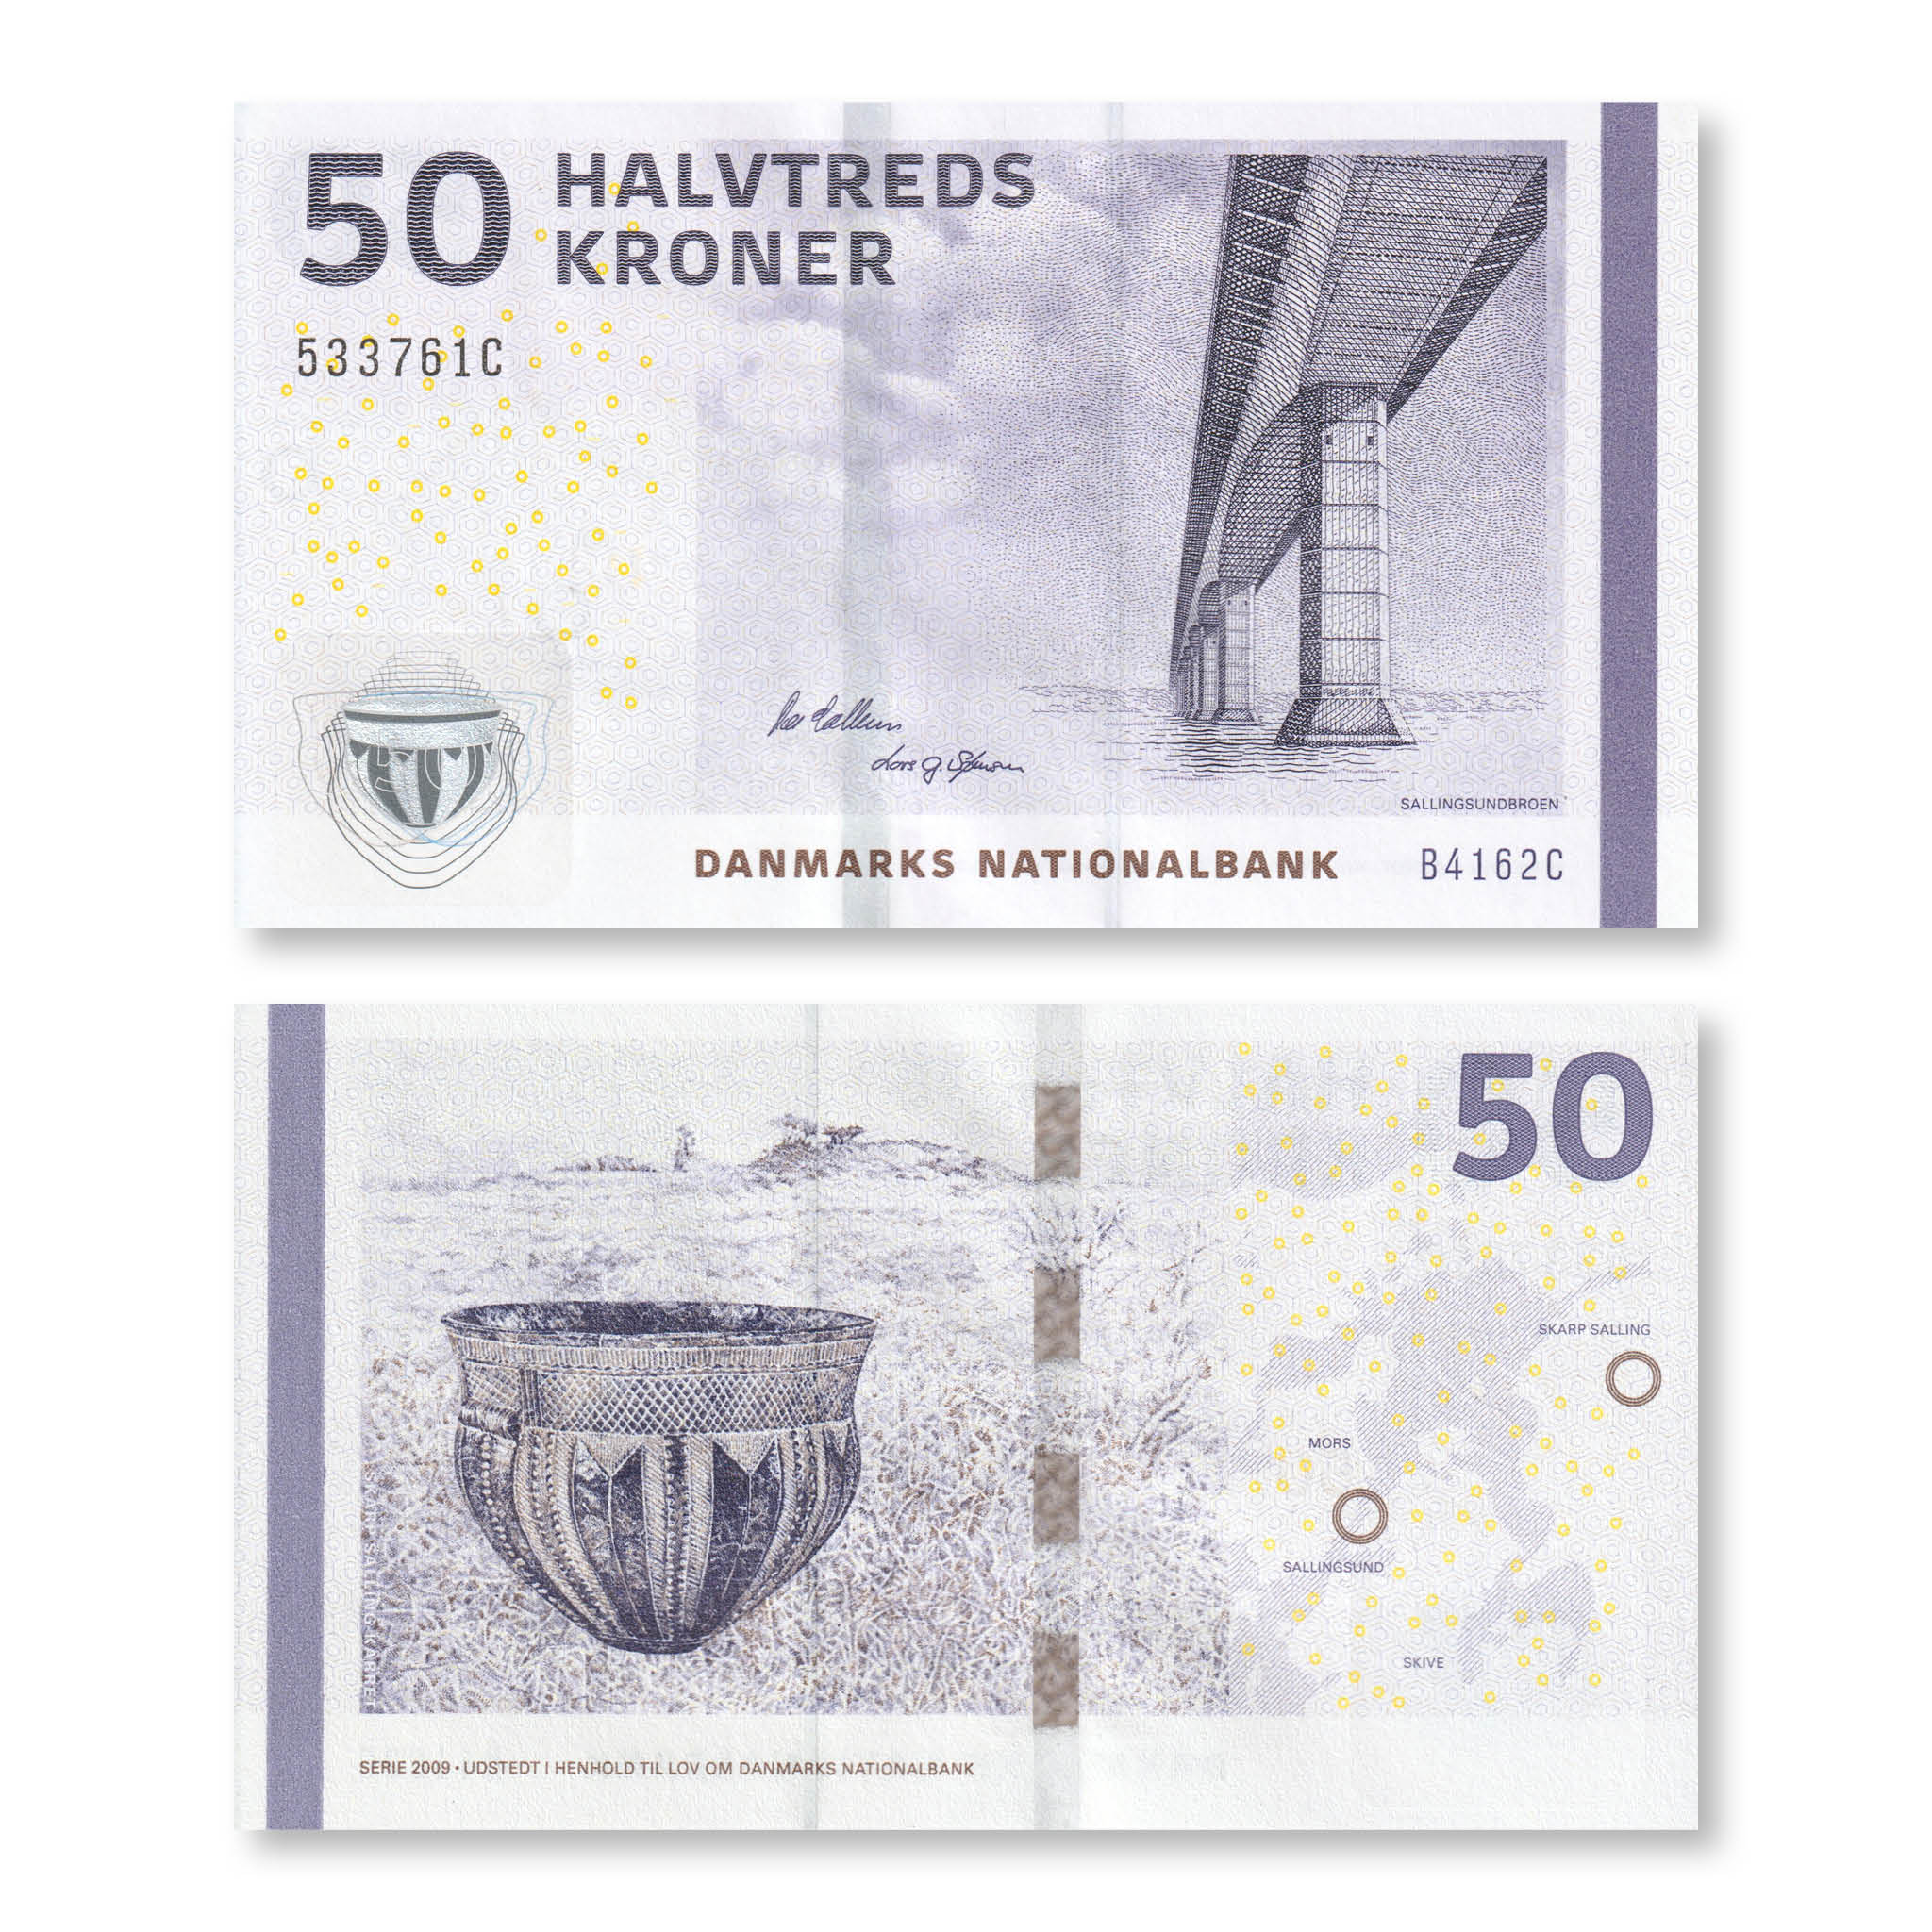 Denmark 50 Kroner, 2016, B935f, P65h, UNC - Robert's World Money - World Banknotes